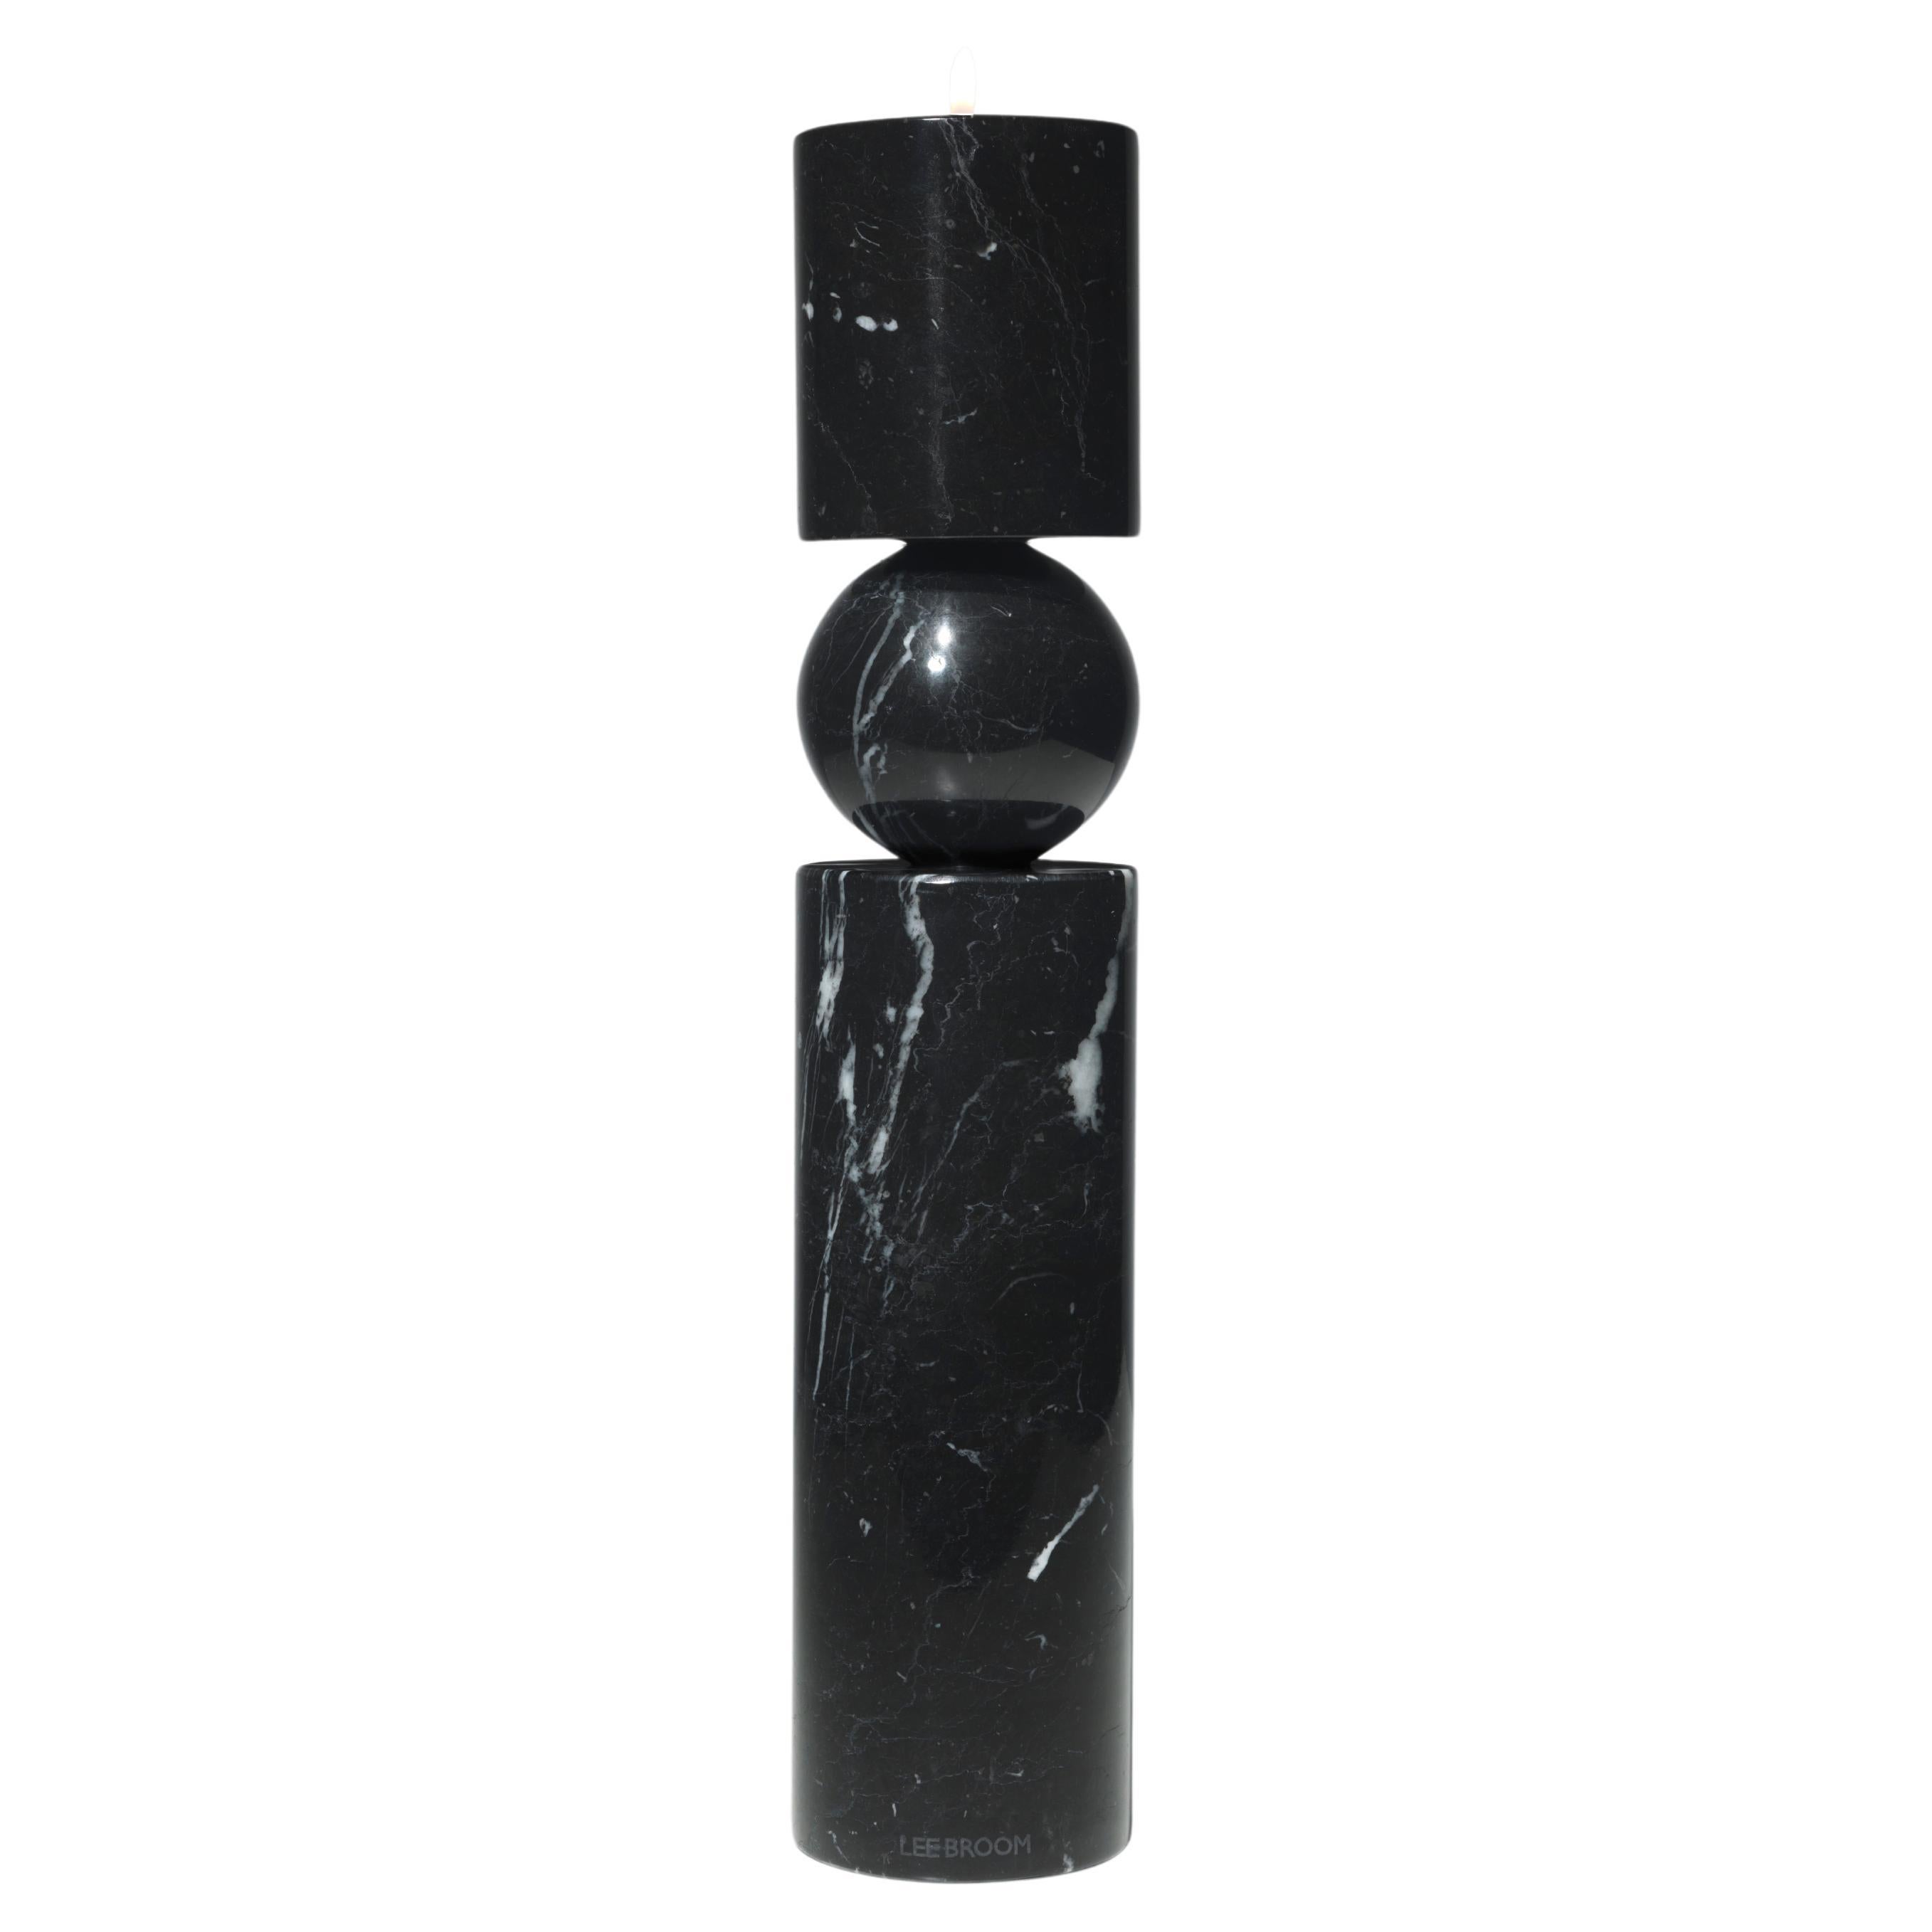 Lee Broom - Fulcrum Candlestick Black Marble - Large For Sale